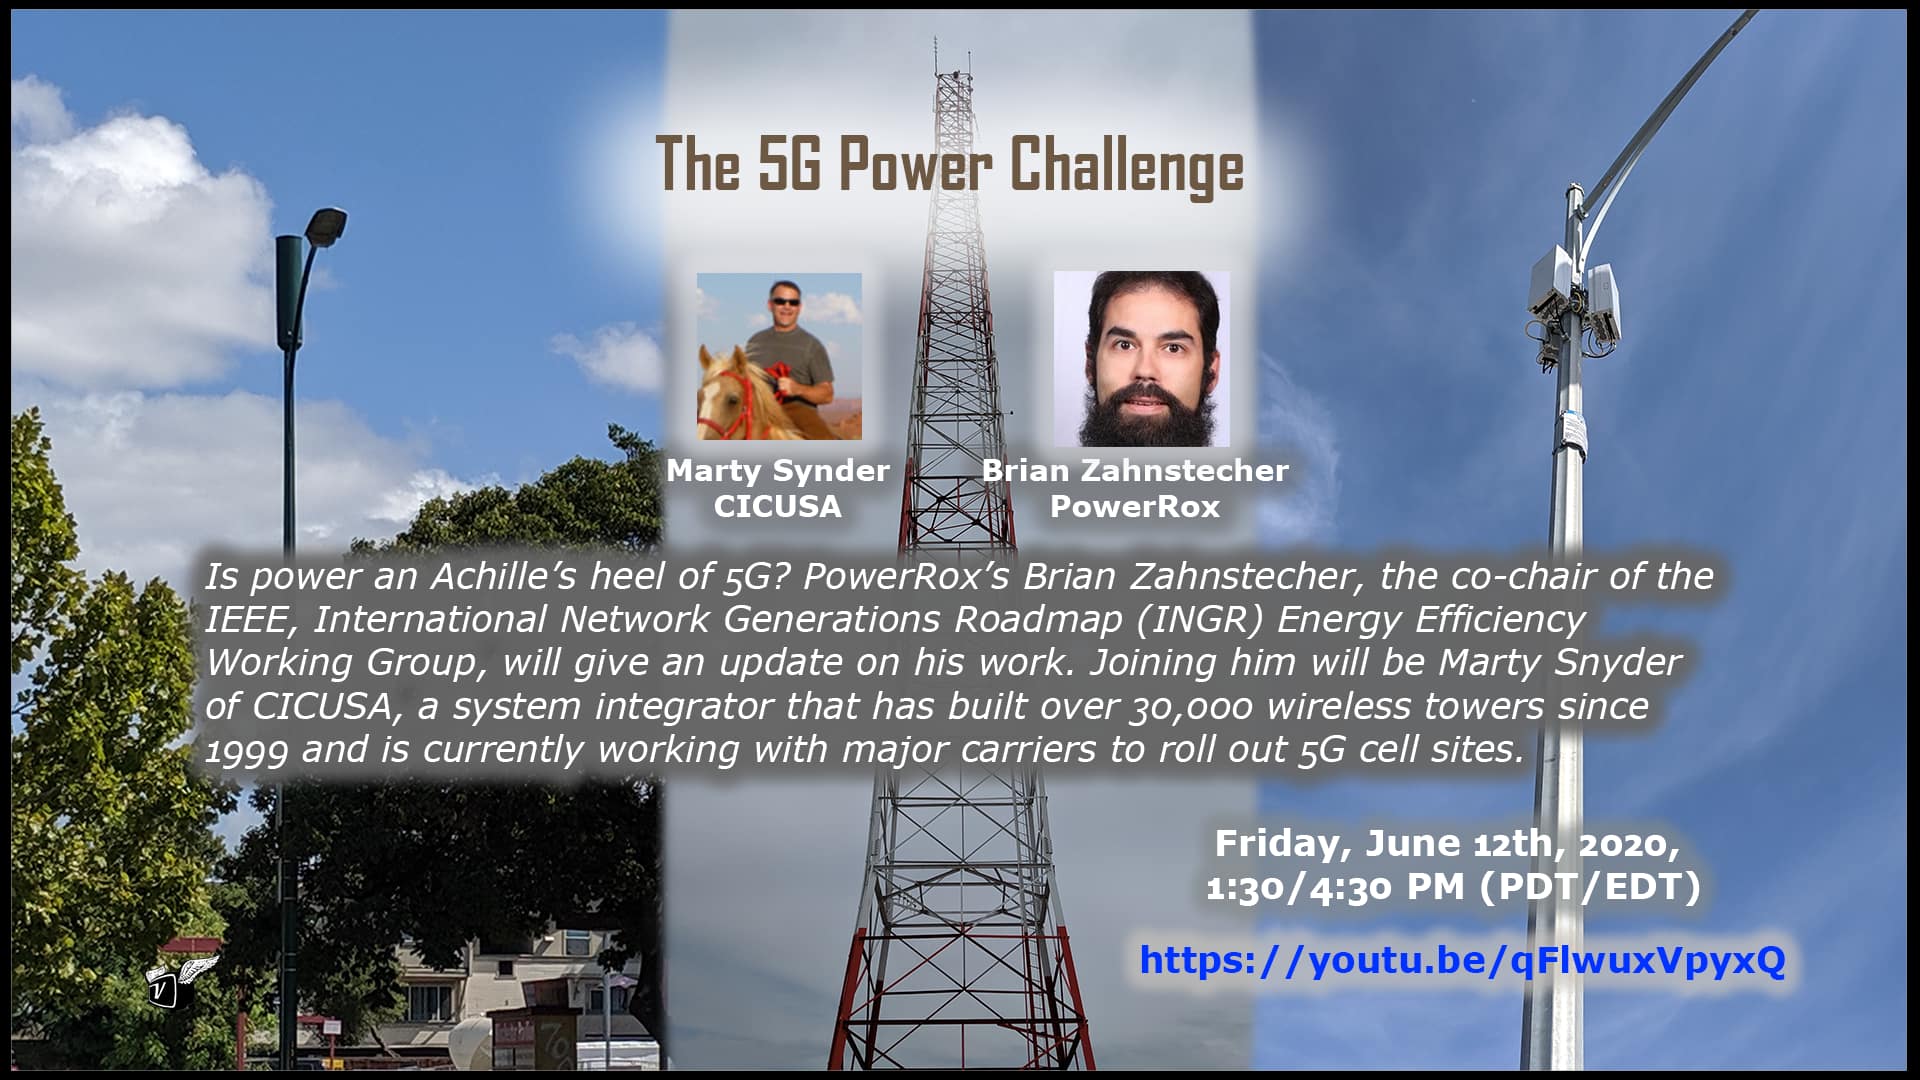 The 5G Power Challenge